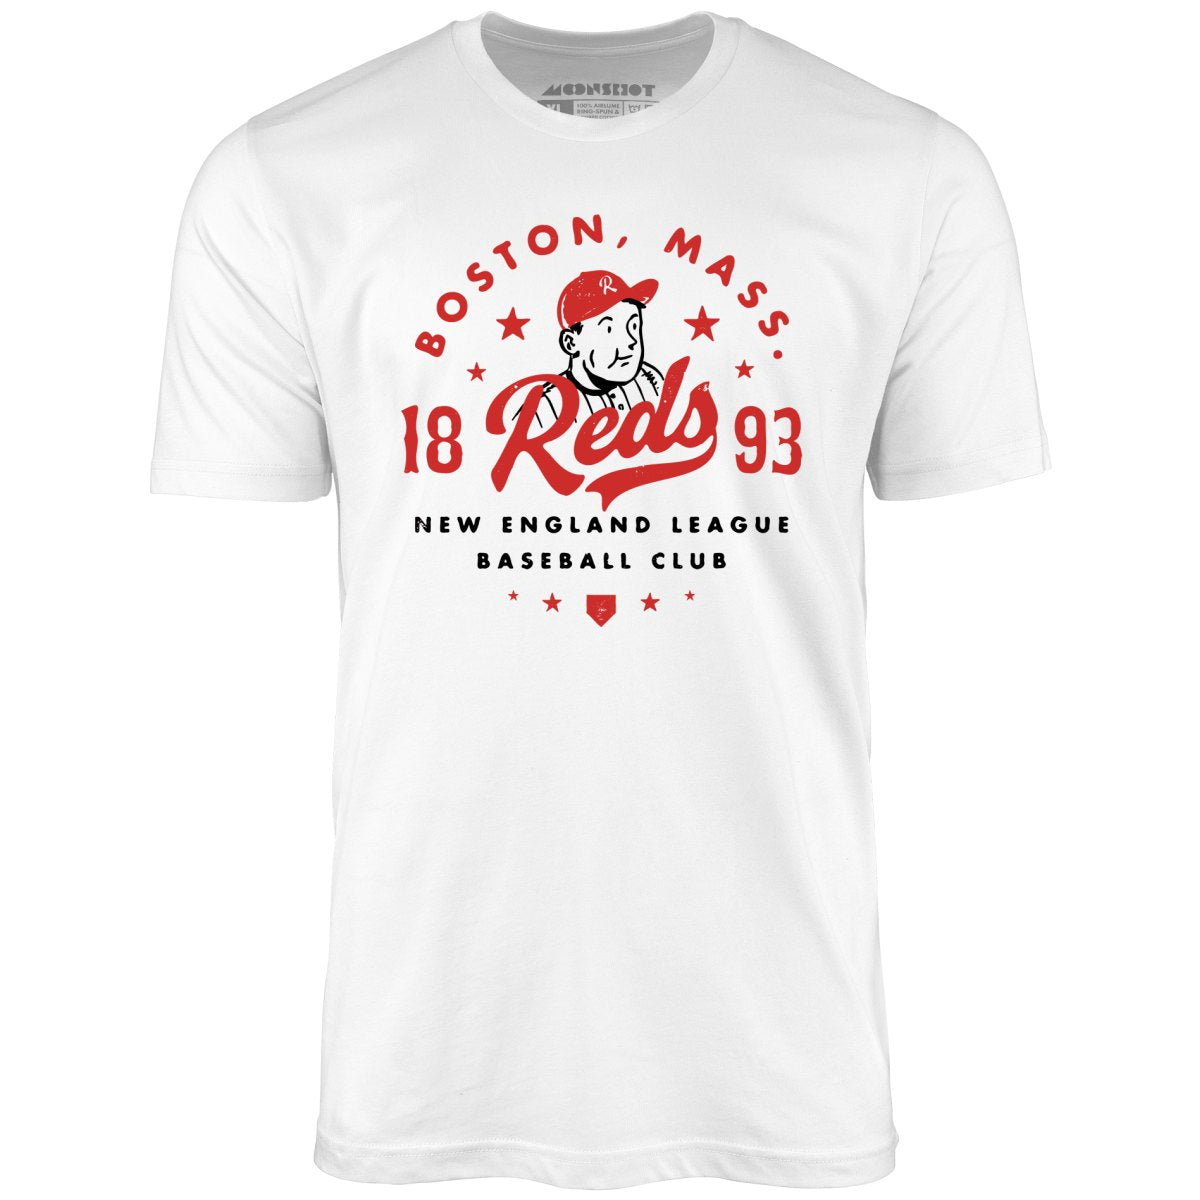 Boston Reds - Massachusetts - Vintage Defunct Baseball Teams - Unisex T-Shirt